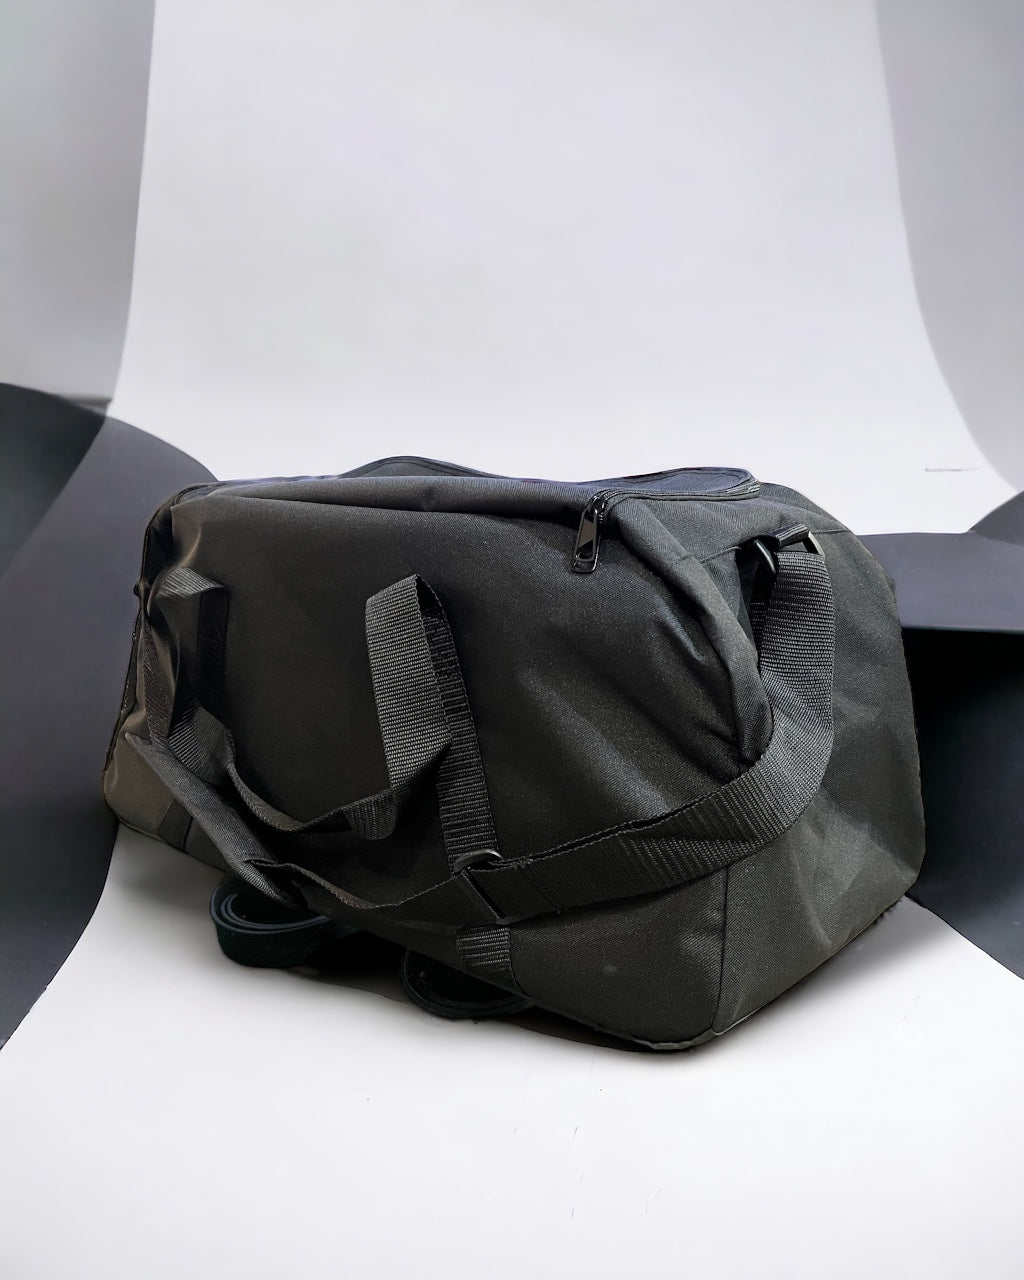 Ads Org Travel Bag - Black